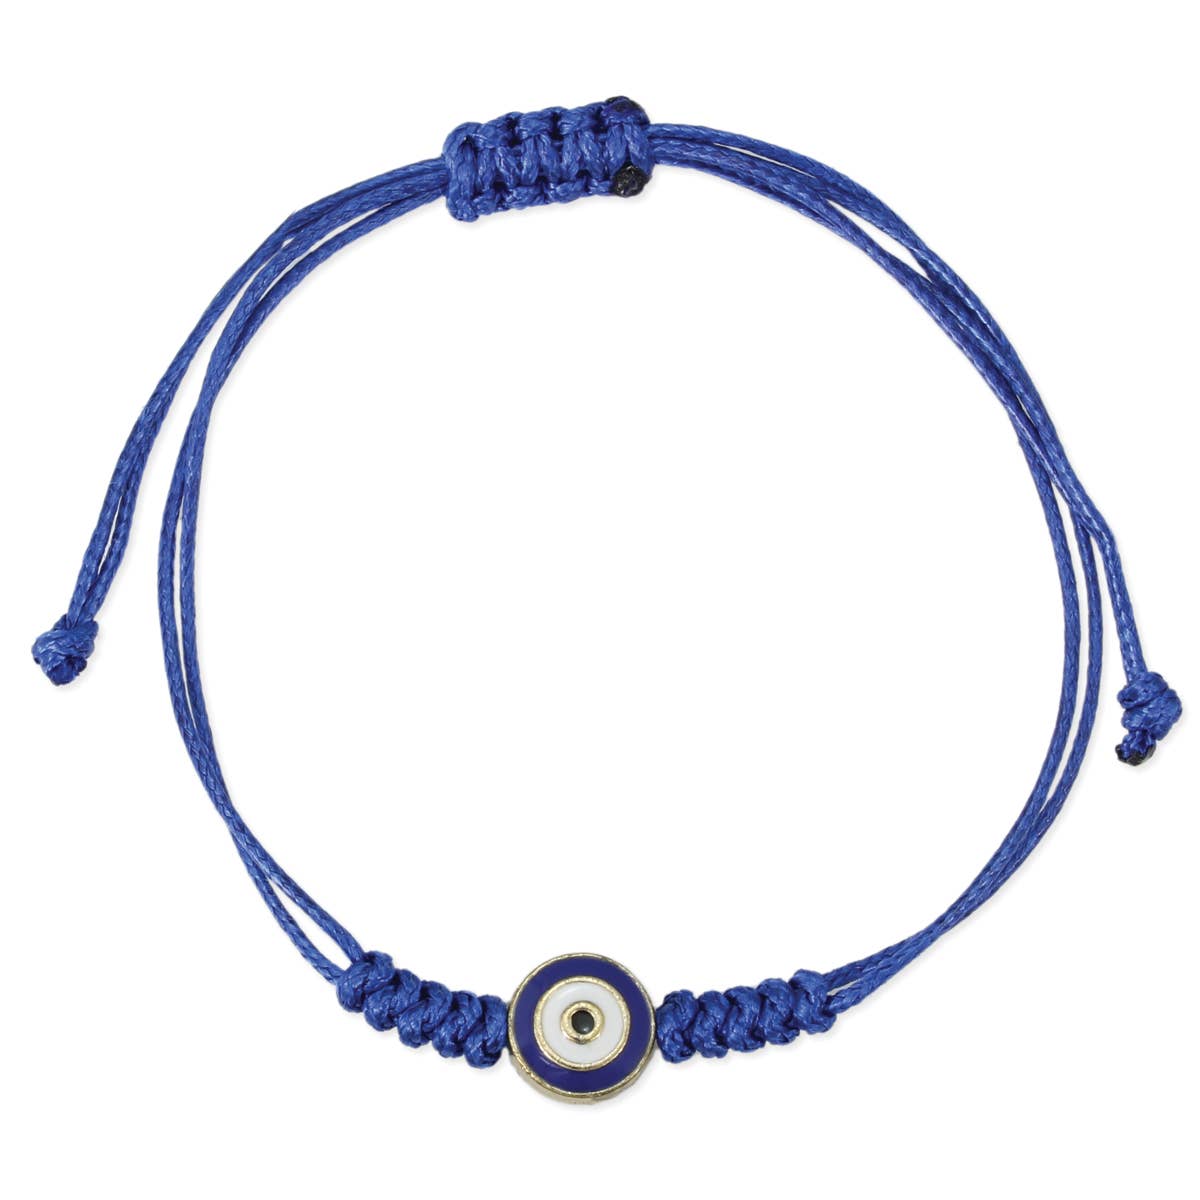 Calming Protection Blue Eye Pull Bracelet - Not Every Libra